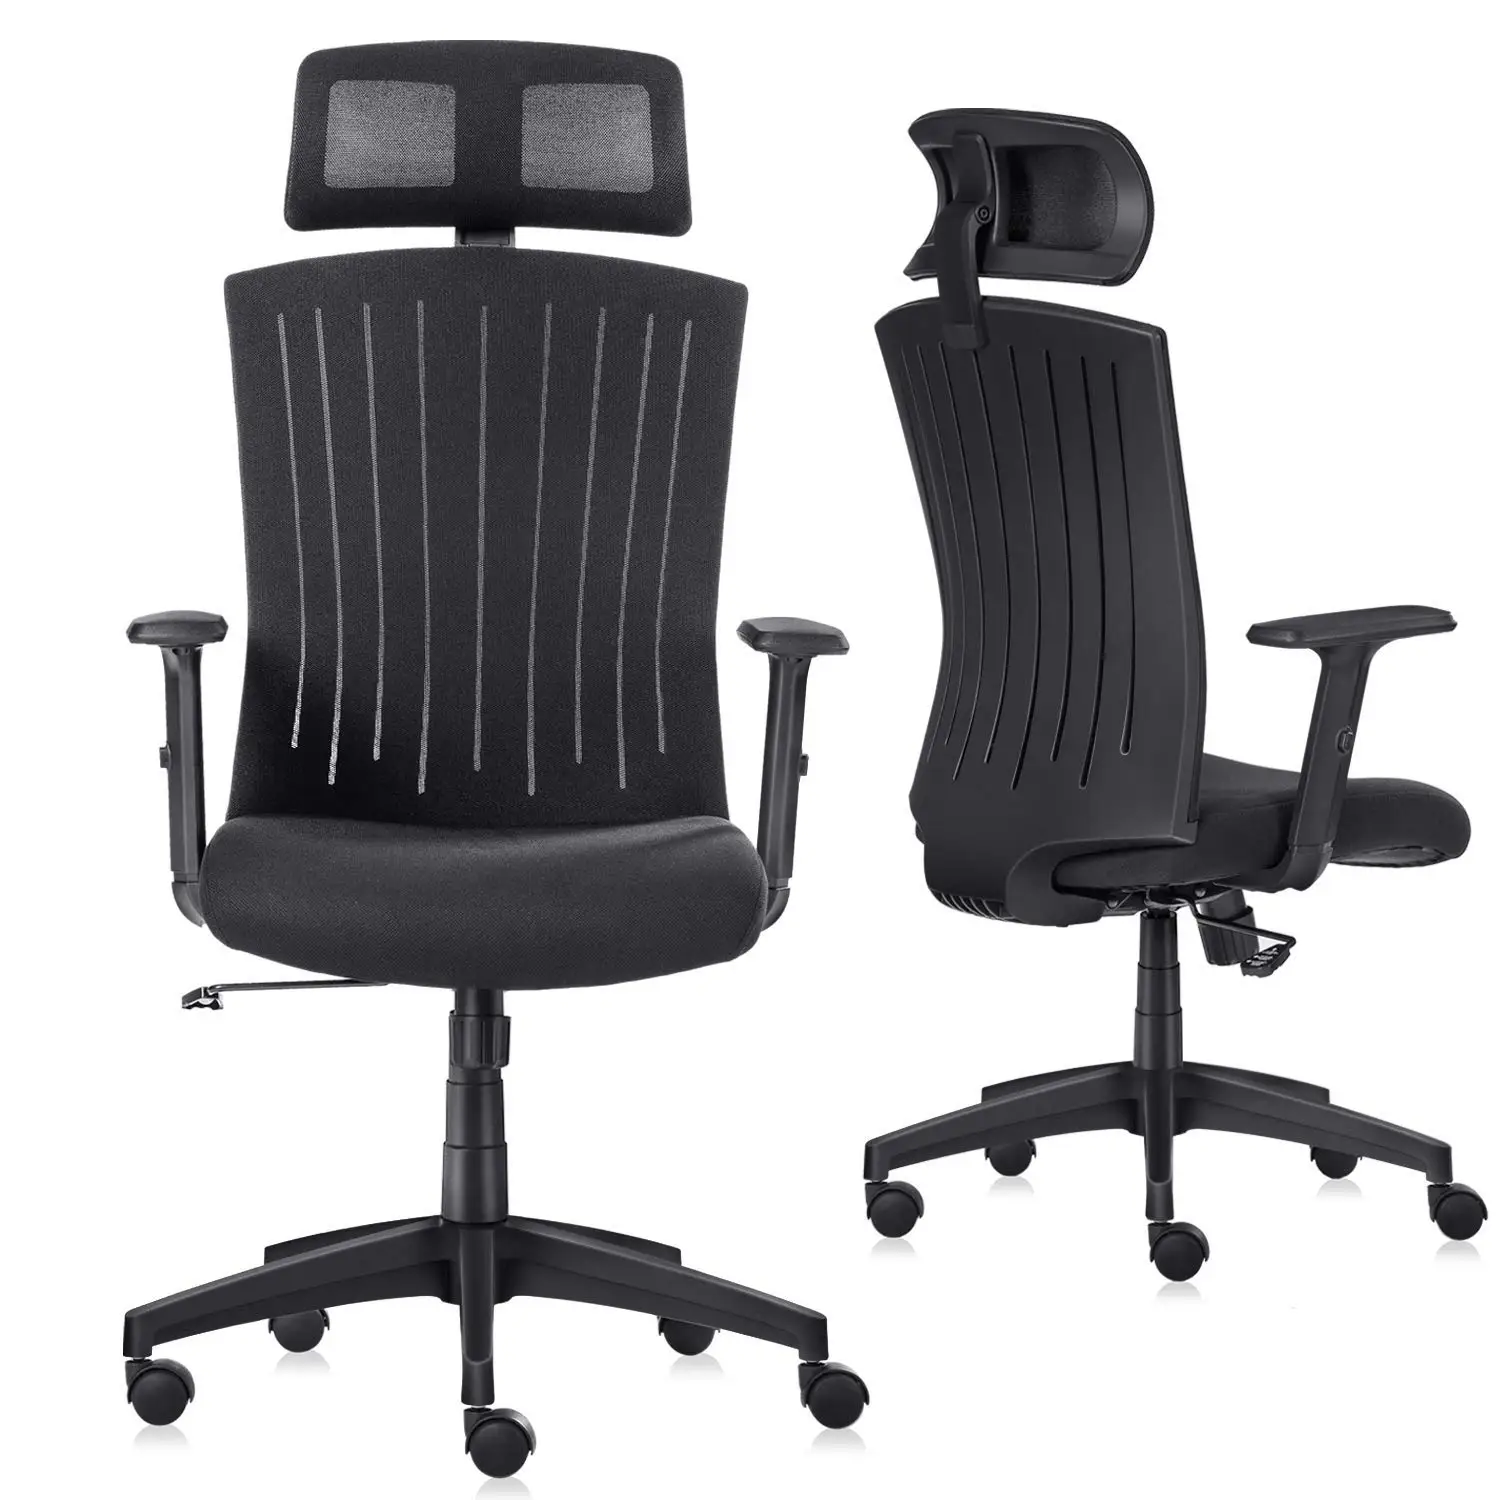 Buy Komene Ergonomic Mesh Office Chair, High Back Computer